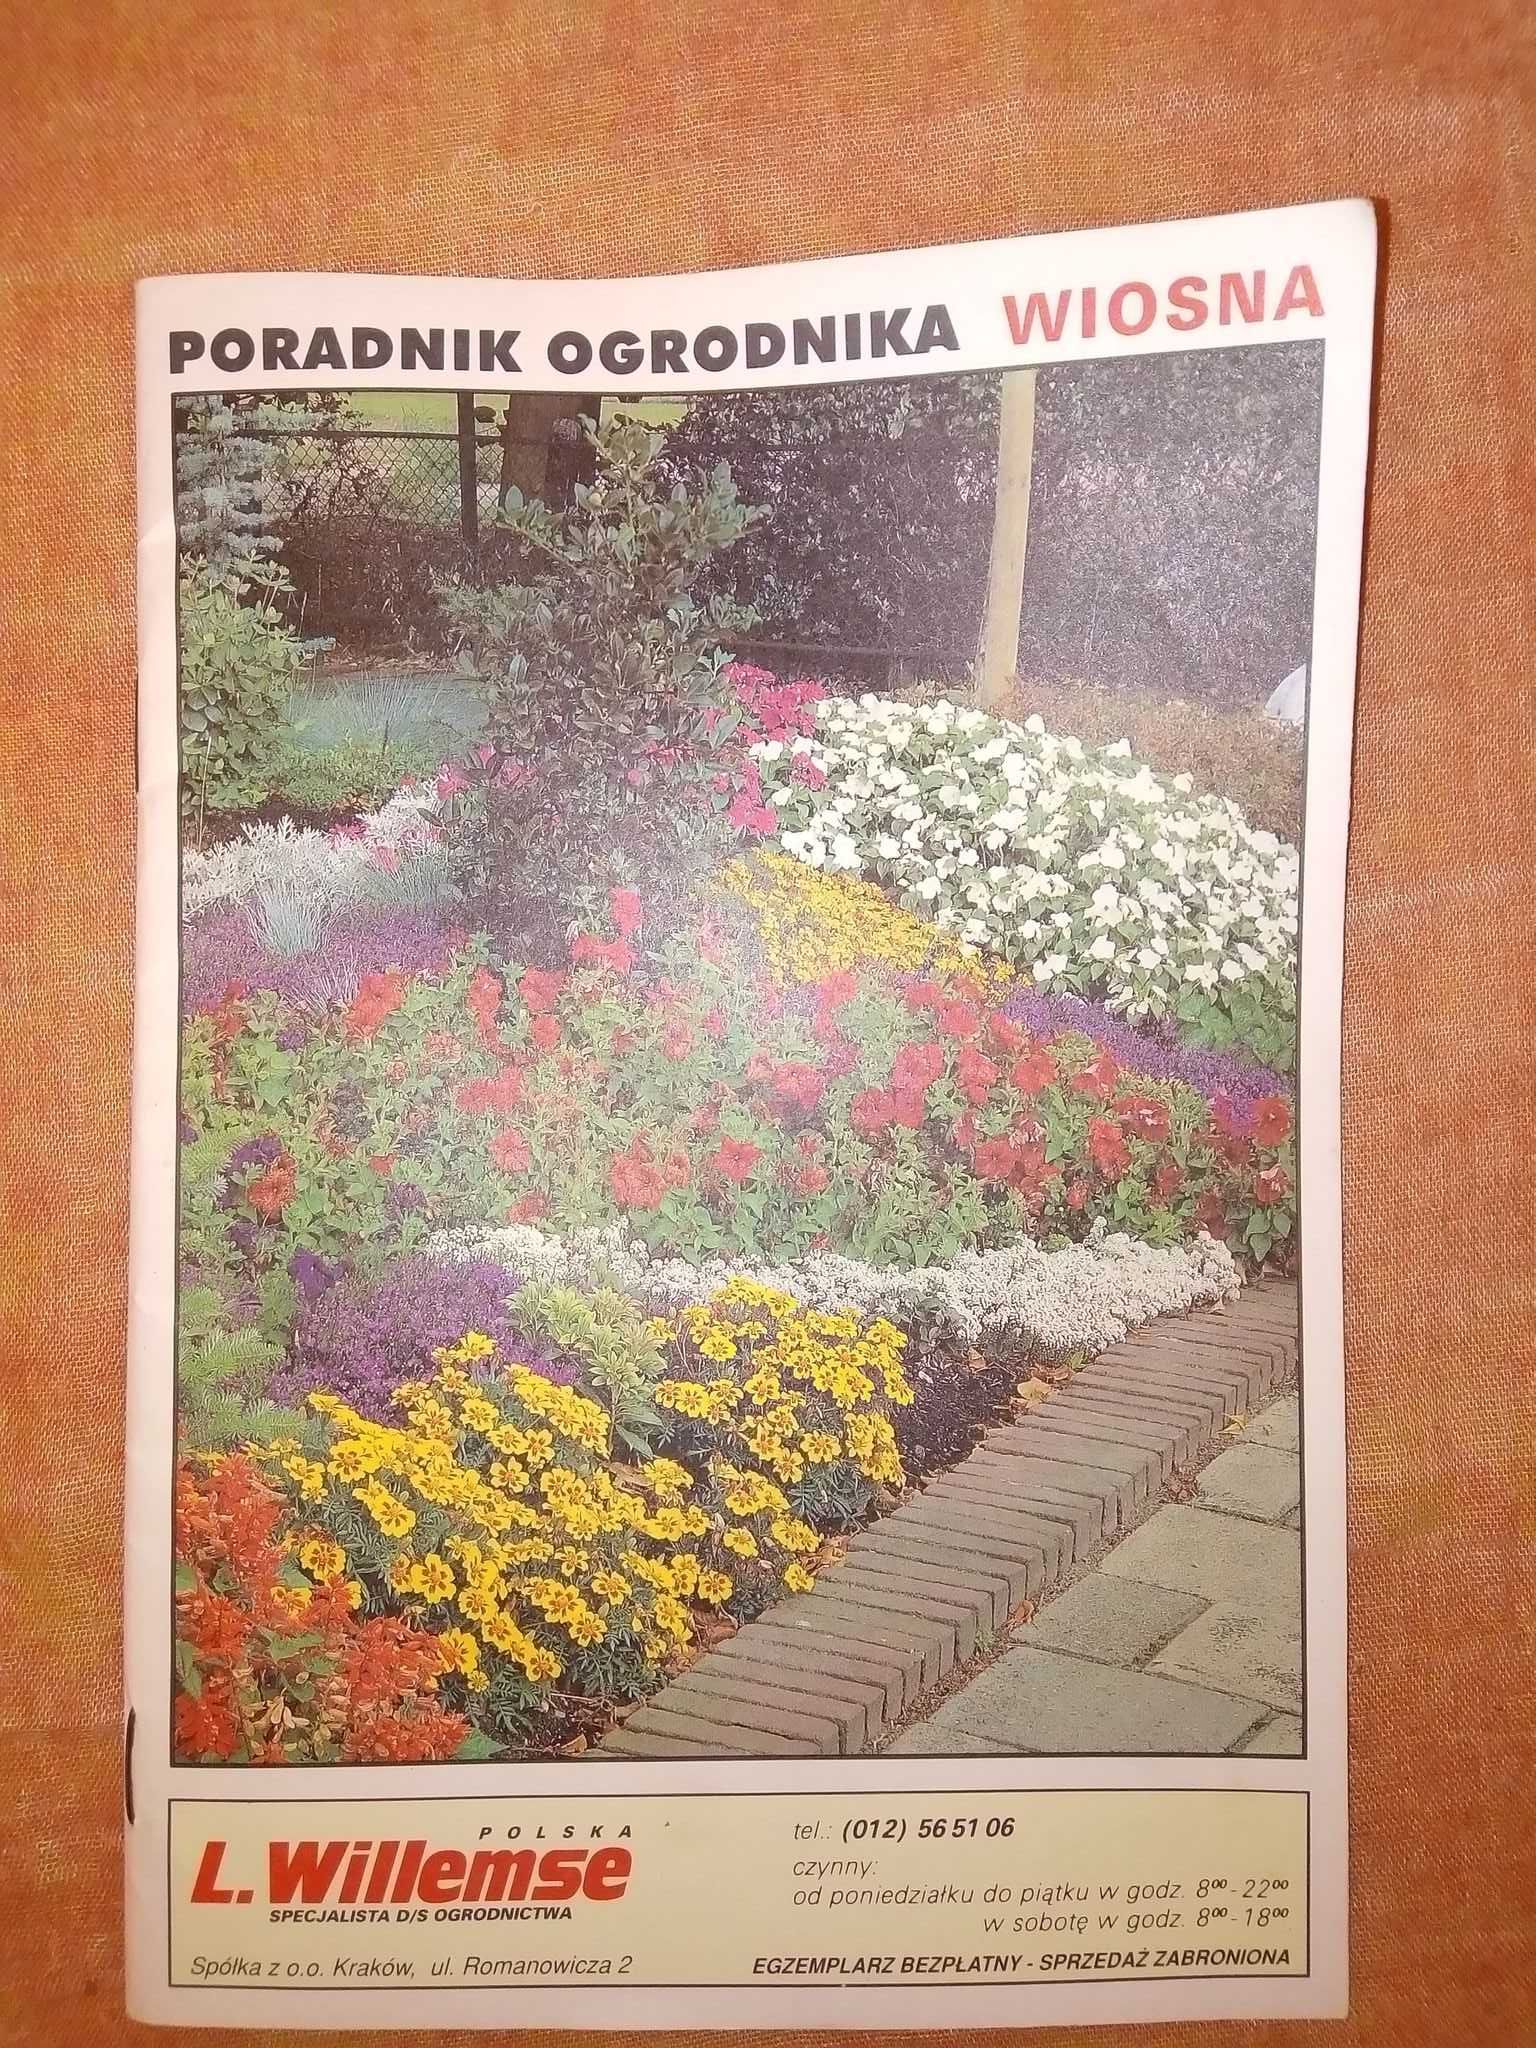 Poradnik ogrodnika Wiosna 1995 Willemse Polska Specjalista ogrodnictwa